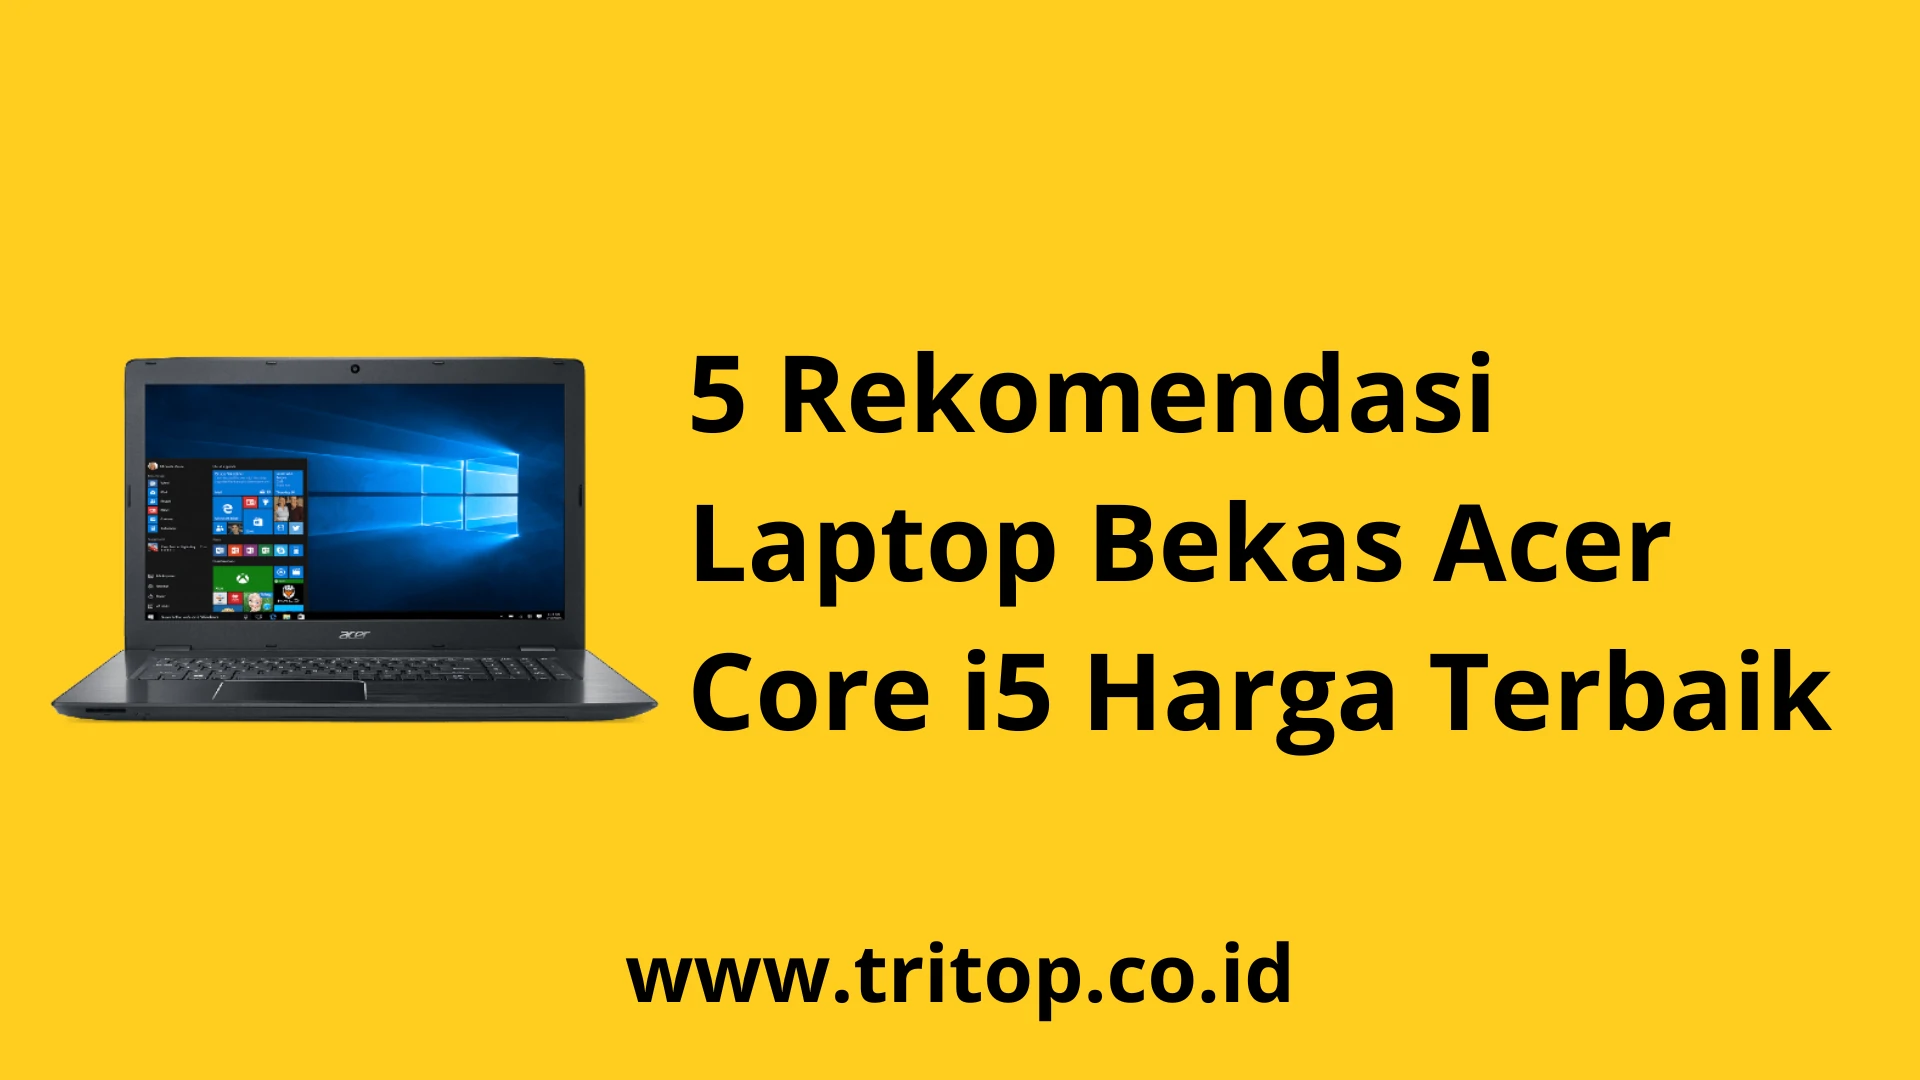 Harga Laptop Bekas Acer Core i5 Tritop.co.id